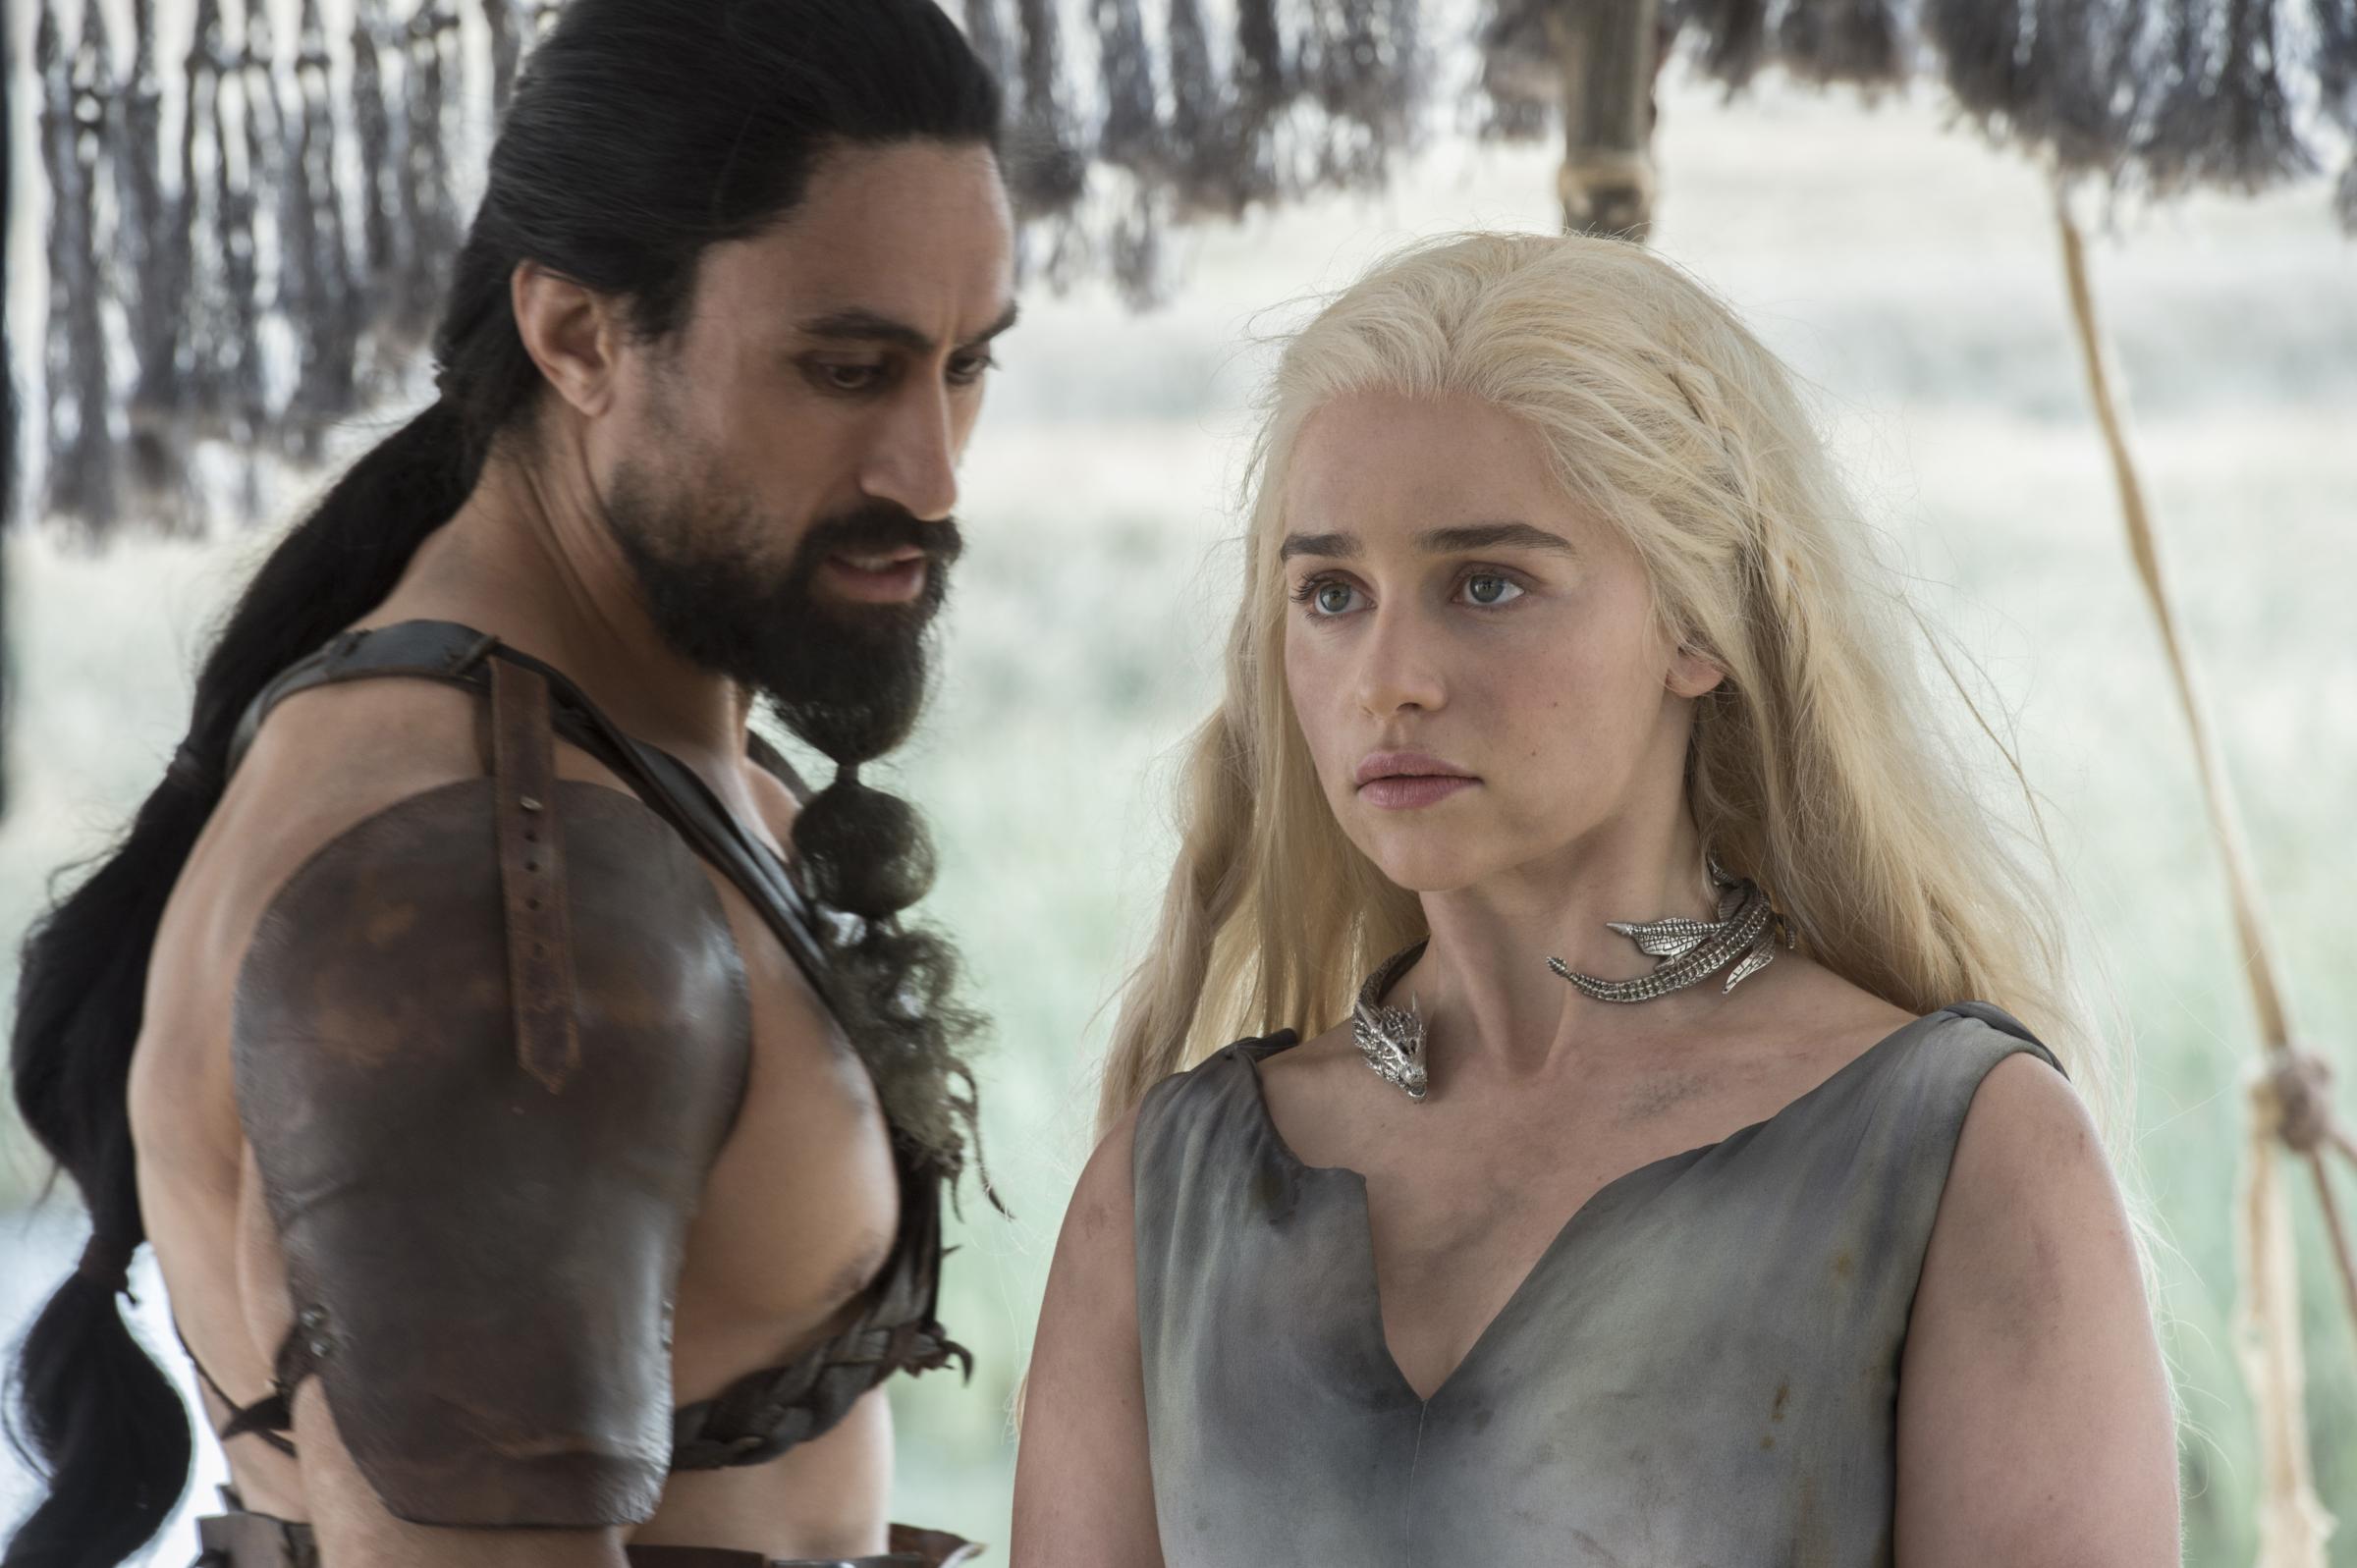 Joe Naufahu and Emilia Clarke in season 6, episode 1 in Game of Thrones.